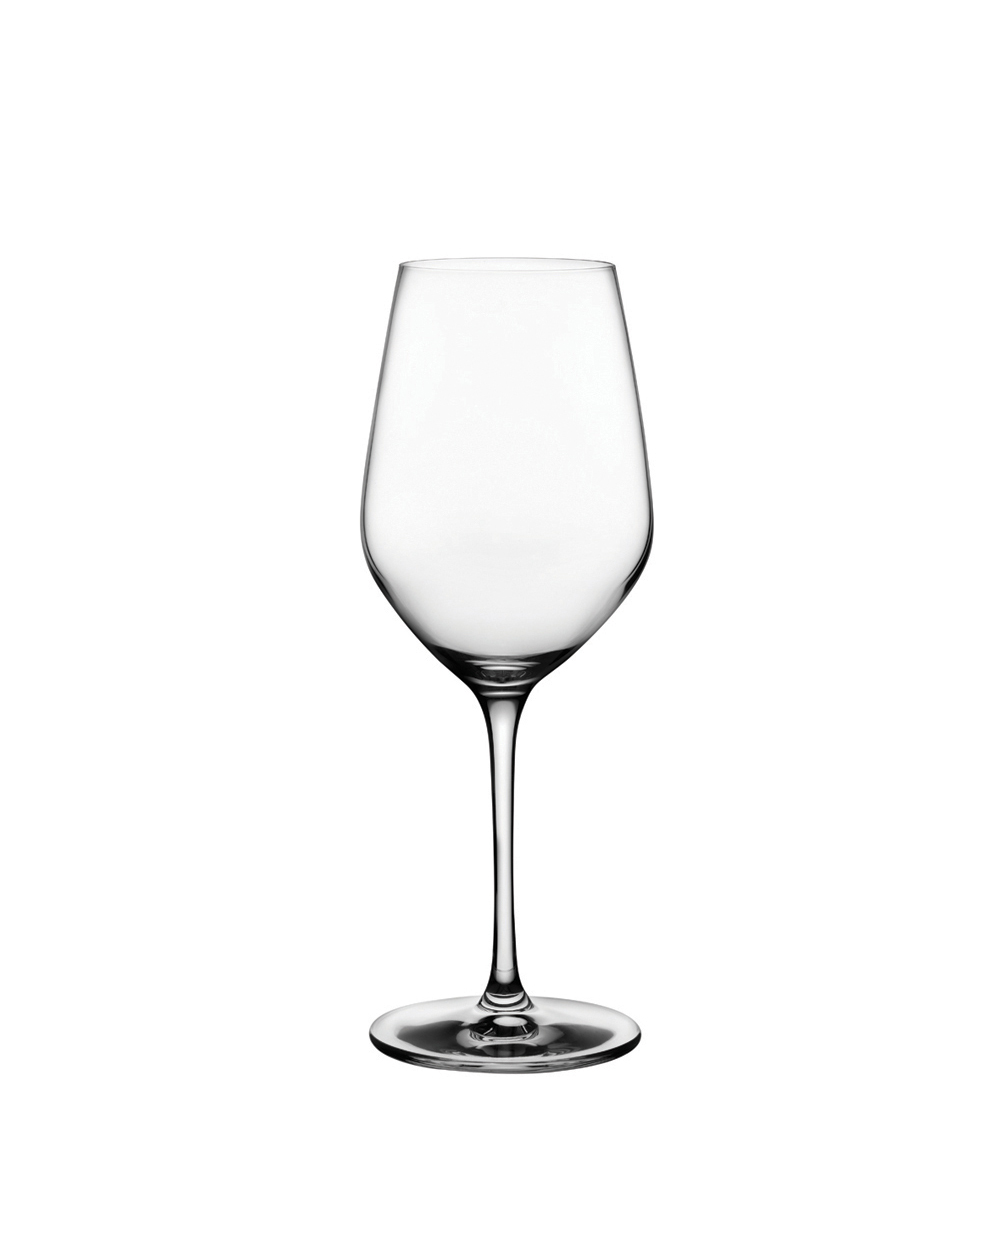 Citta set of two wine glasses, $54.90